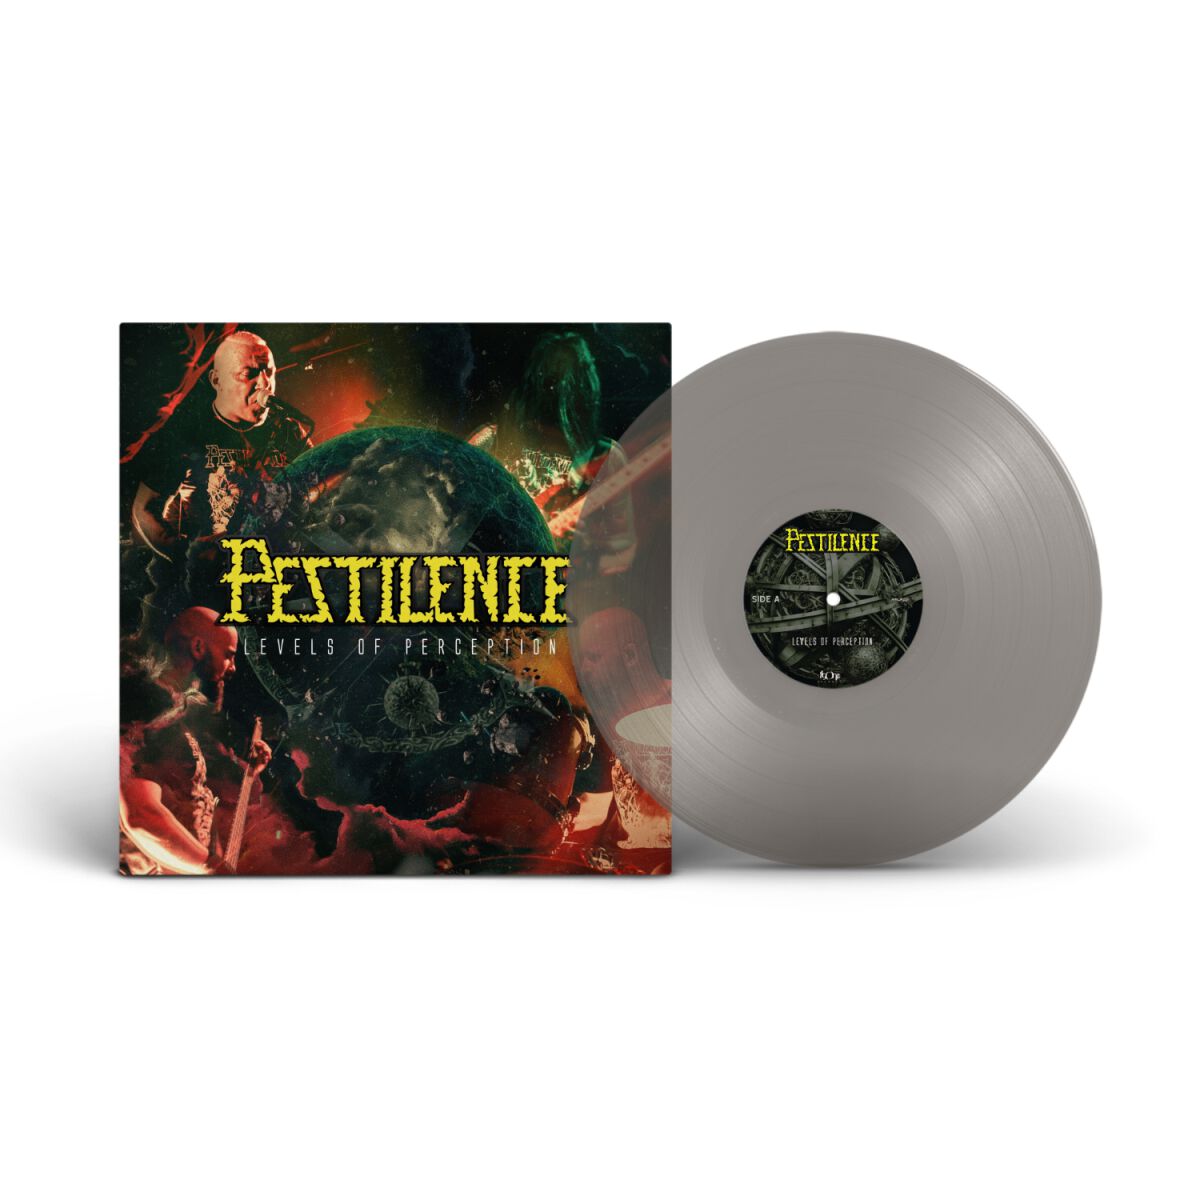 Level of Perception von Pestilence - LP (Coloured, Limited Edition)